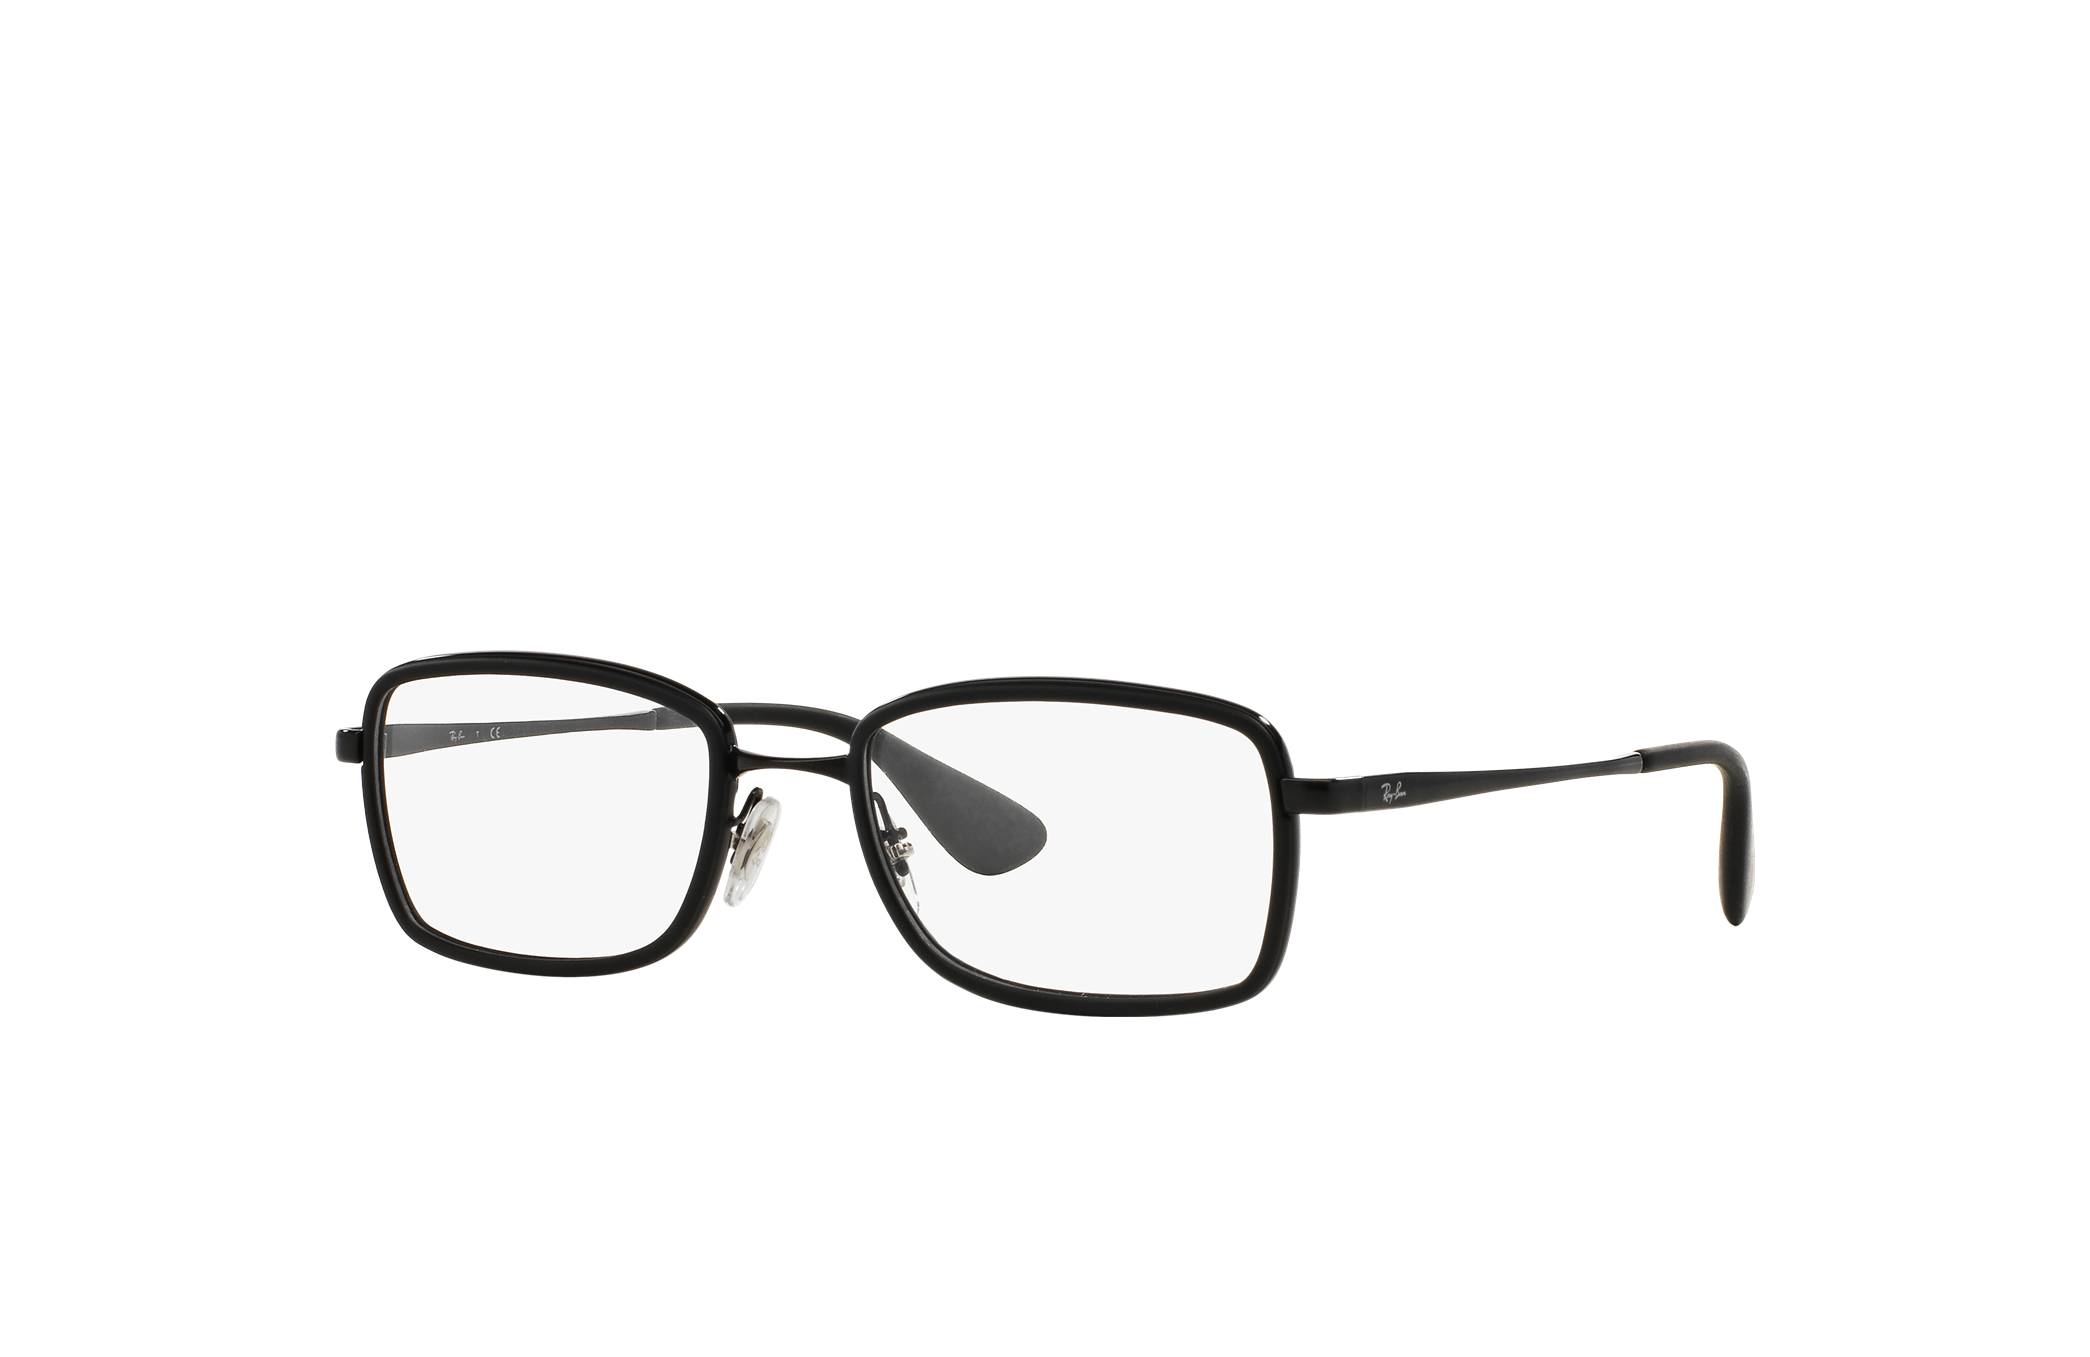 Rb6336 Eyeglasses with Black Frame - RB6336 | Ray-Ban®